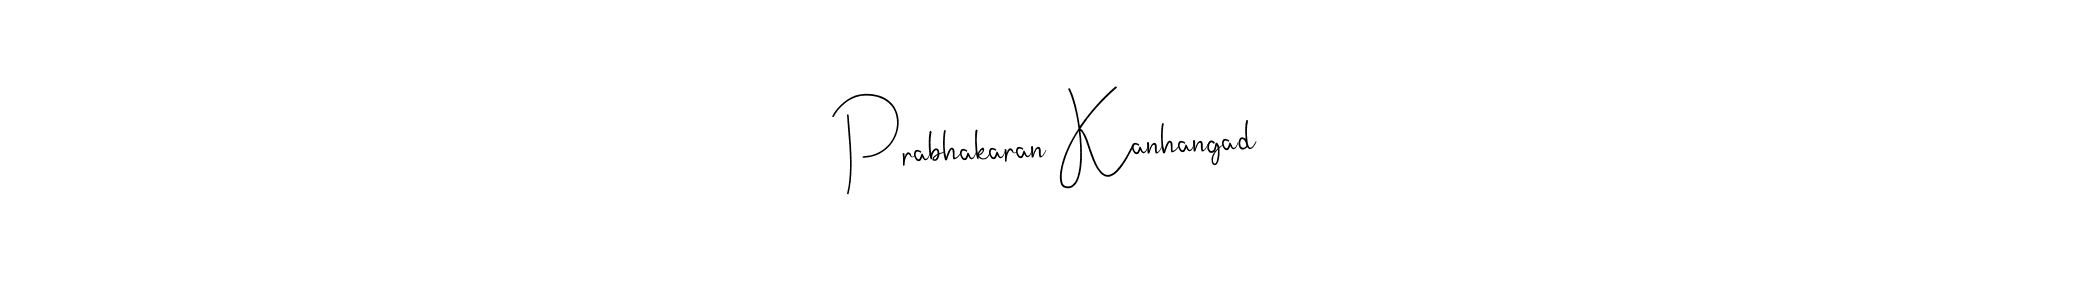 How to Draw Prabhakaran Kanhangad signature style? Andilay-7BmLP is a latest design signature styles for name Prabhakaran Kanhangad. Prabhakaran Kanhangad signature style 4 images and pictures png